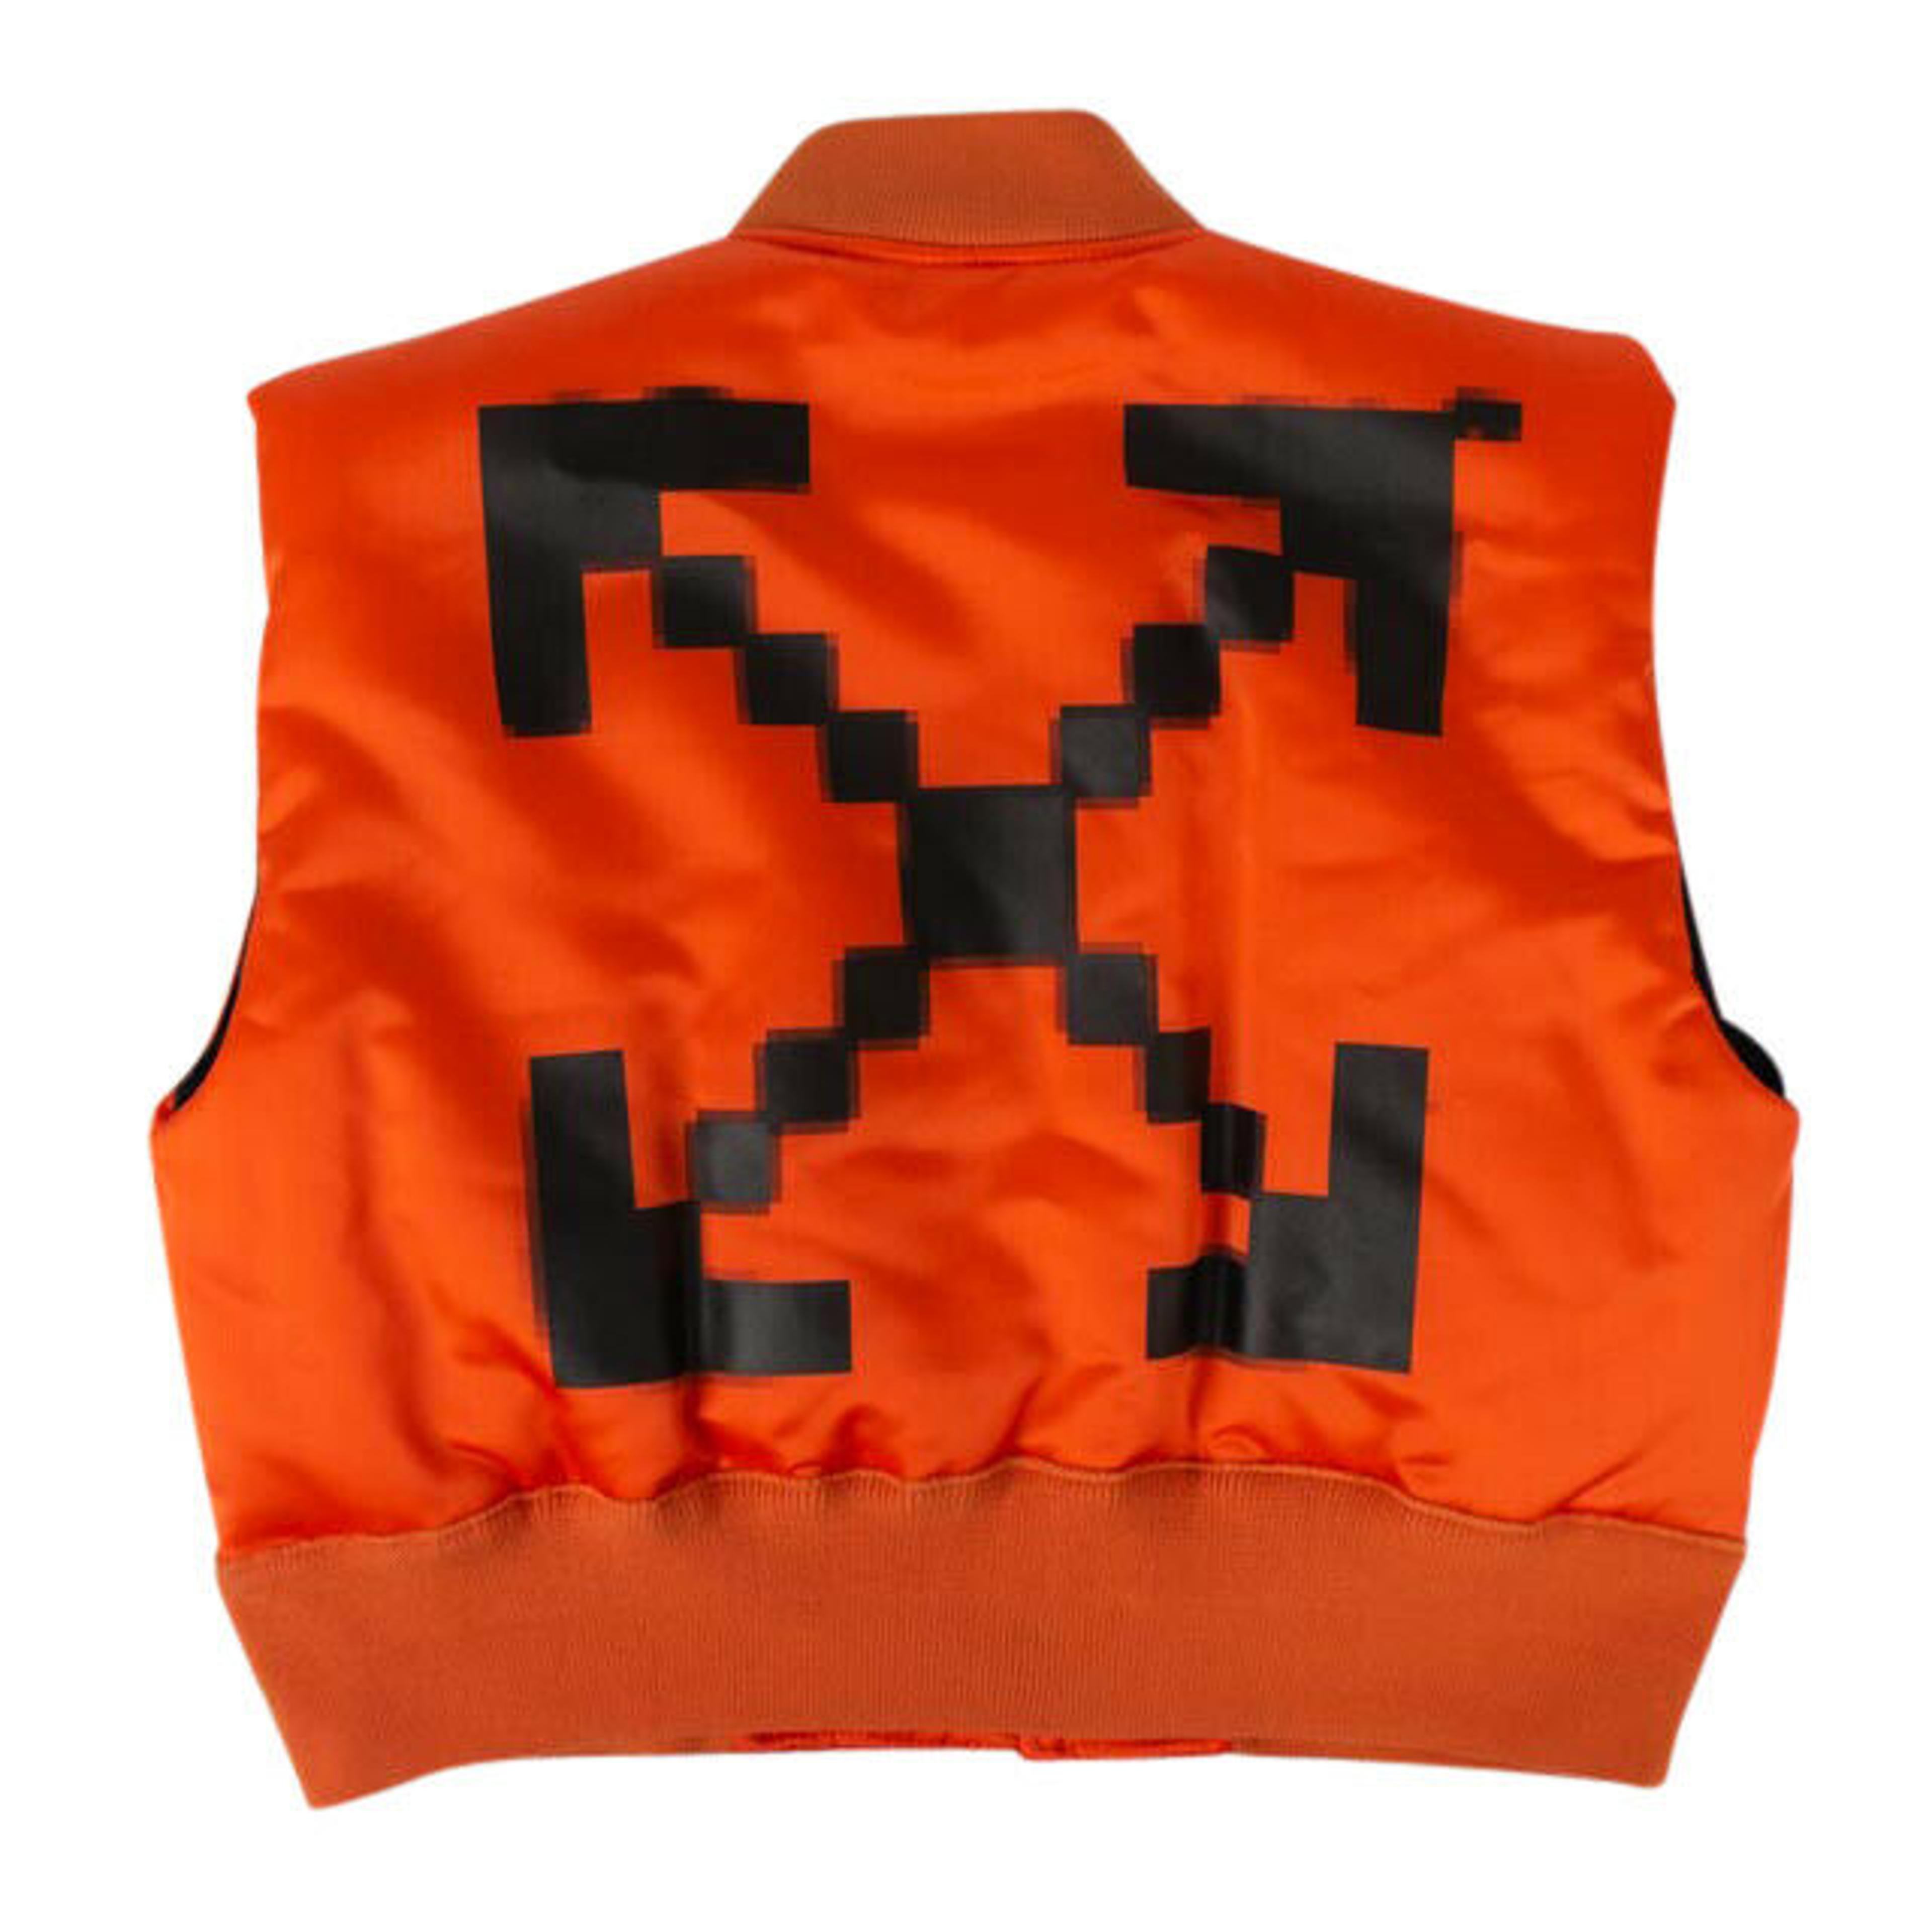 Alternate View 1 of Cropped Arrows Vest Jacket - Orange